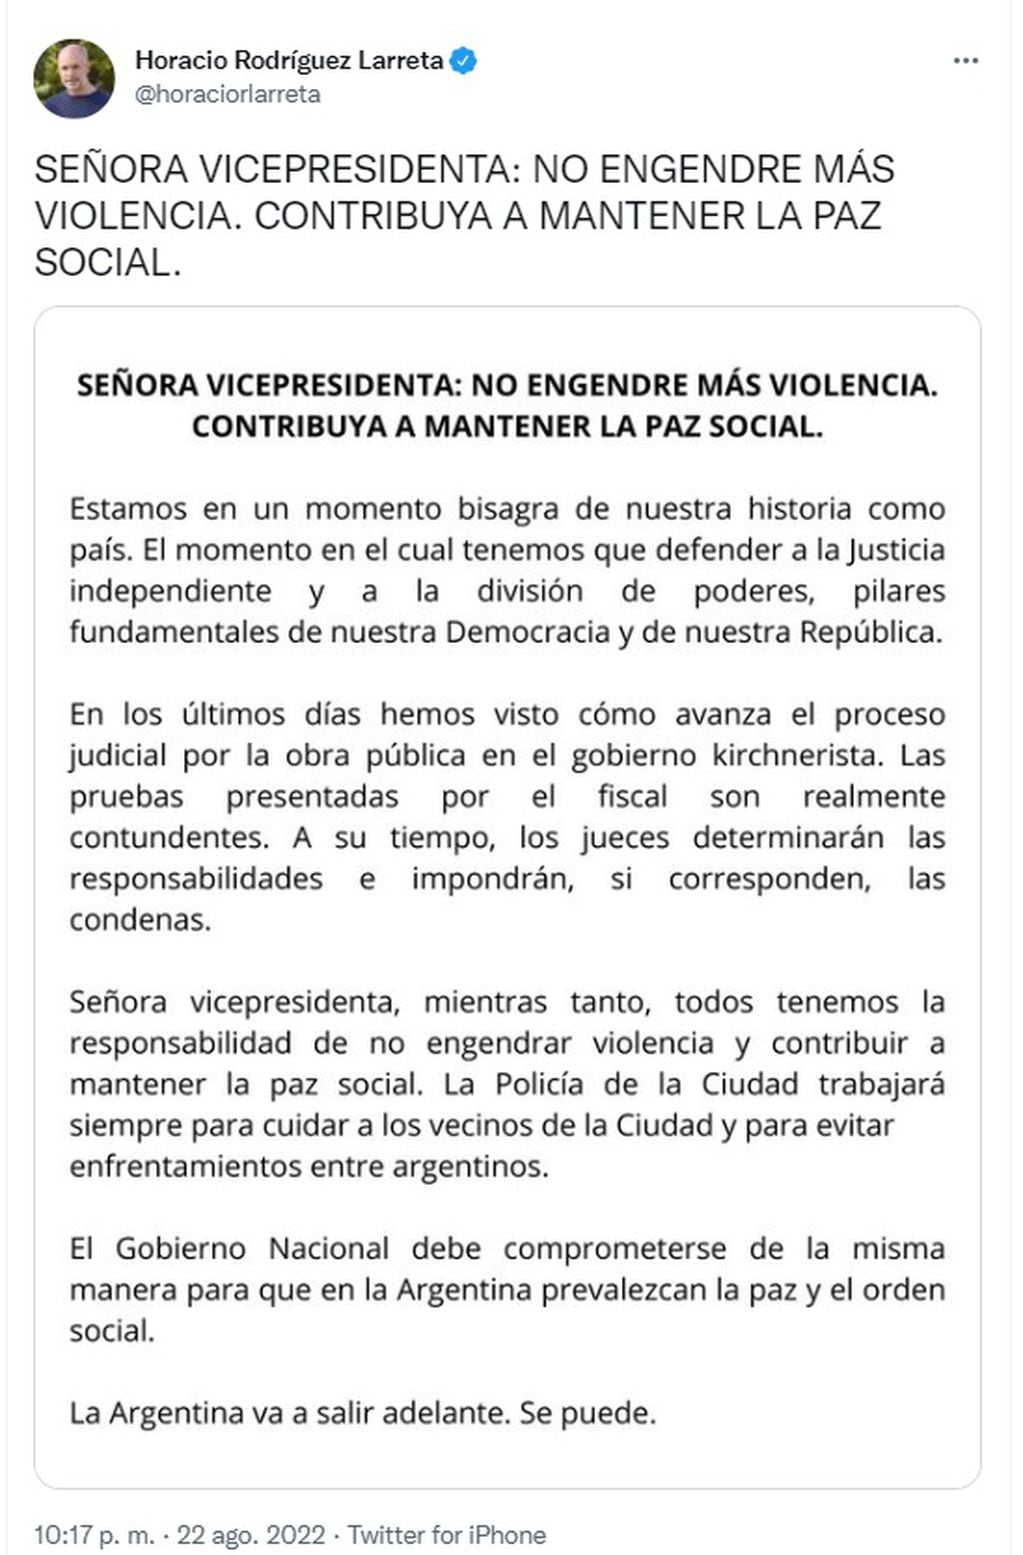 Vía Twitter, Horacio Rodríguez Larreta le contestó a Cristina Kirchner